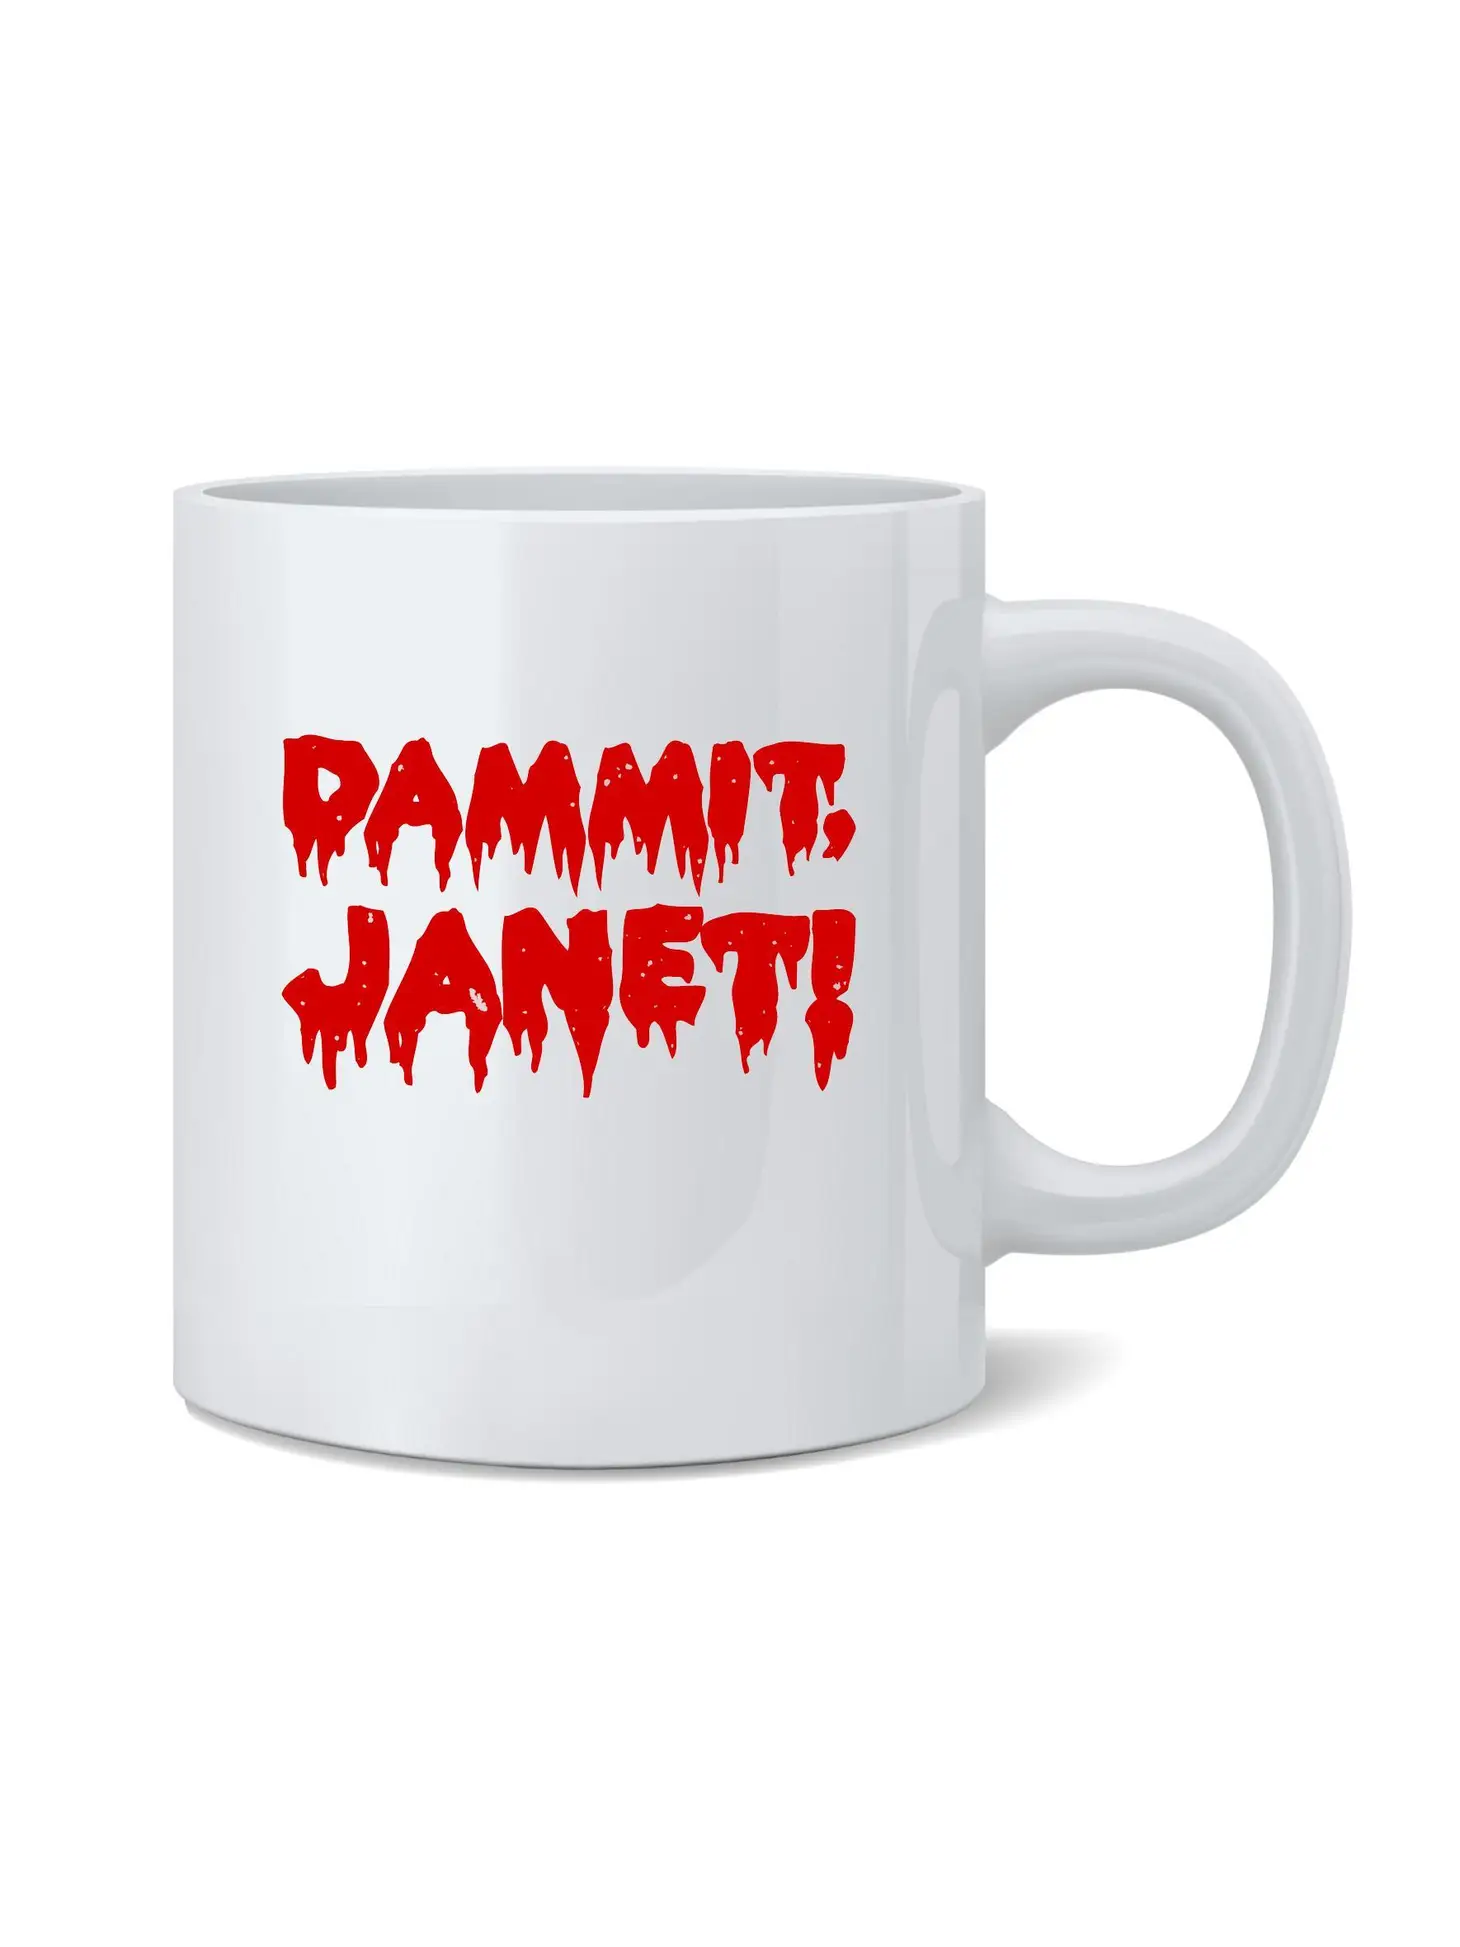 Dammit Janet Coffee Mug